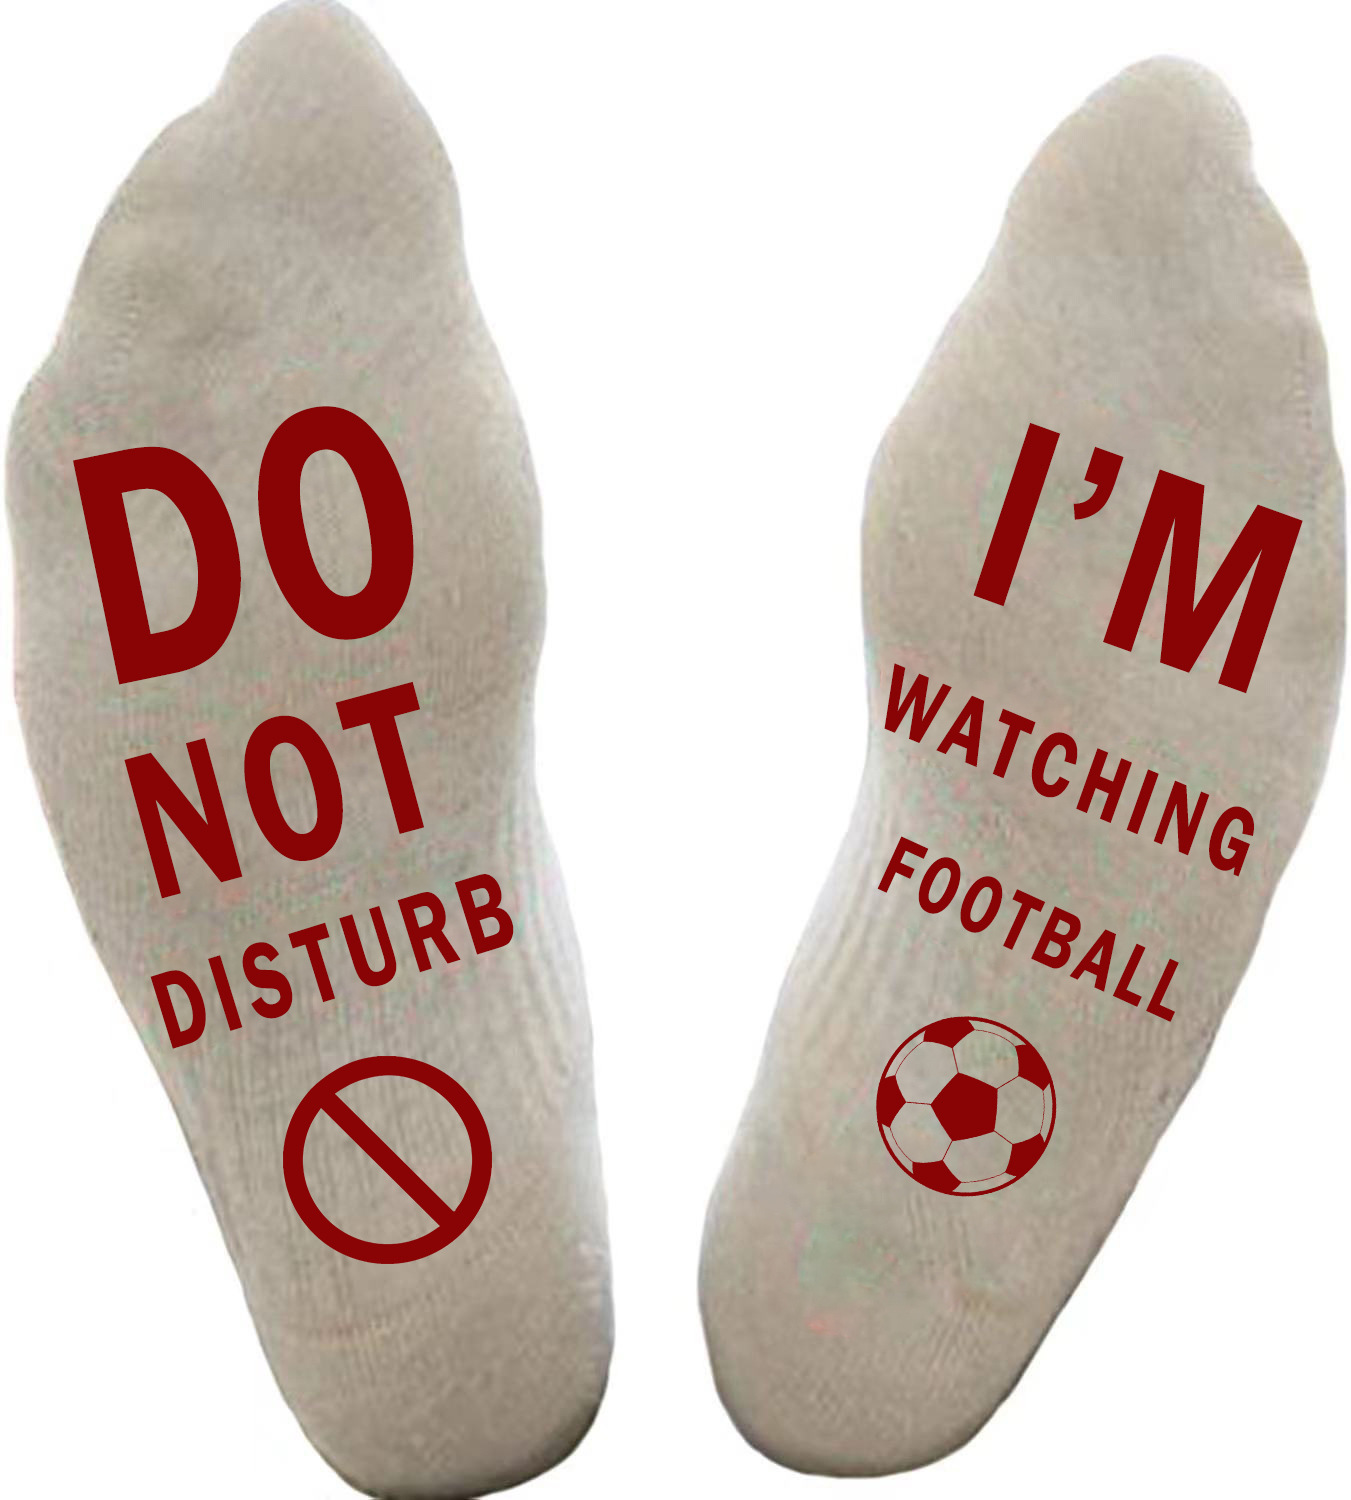 Soccer socks DO NOT DISTURB WATCHING FOOTBALL casual socks